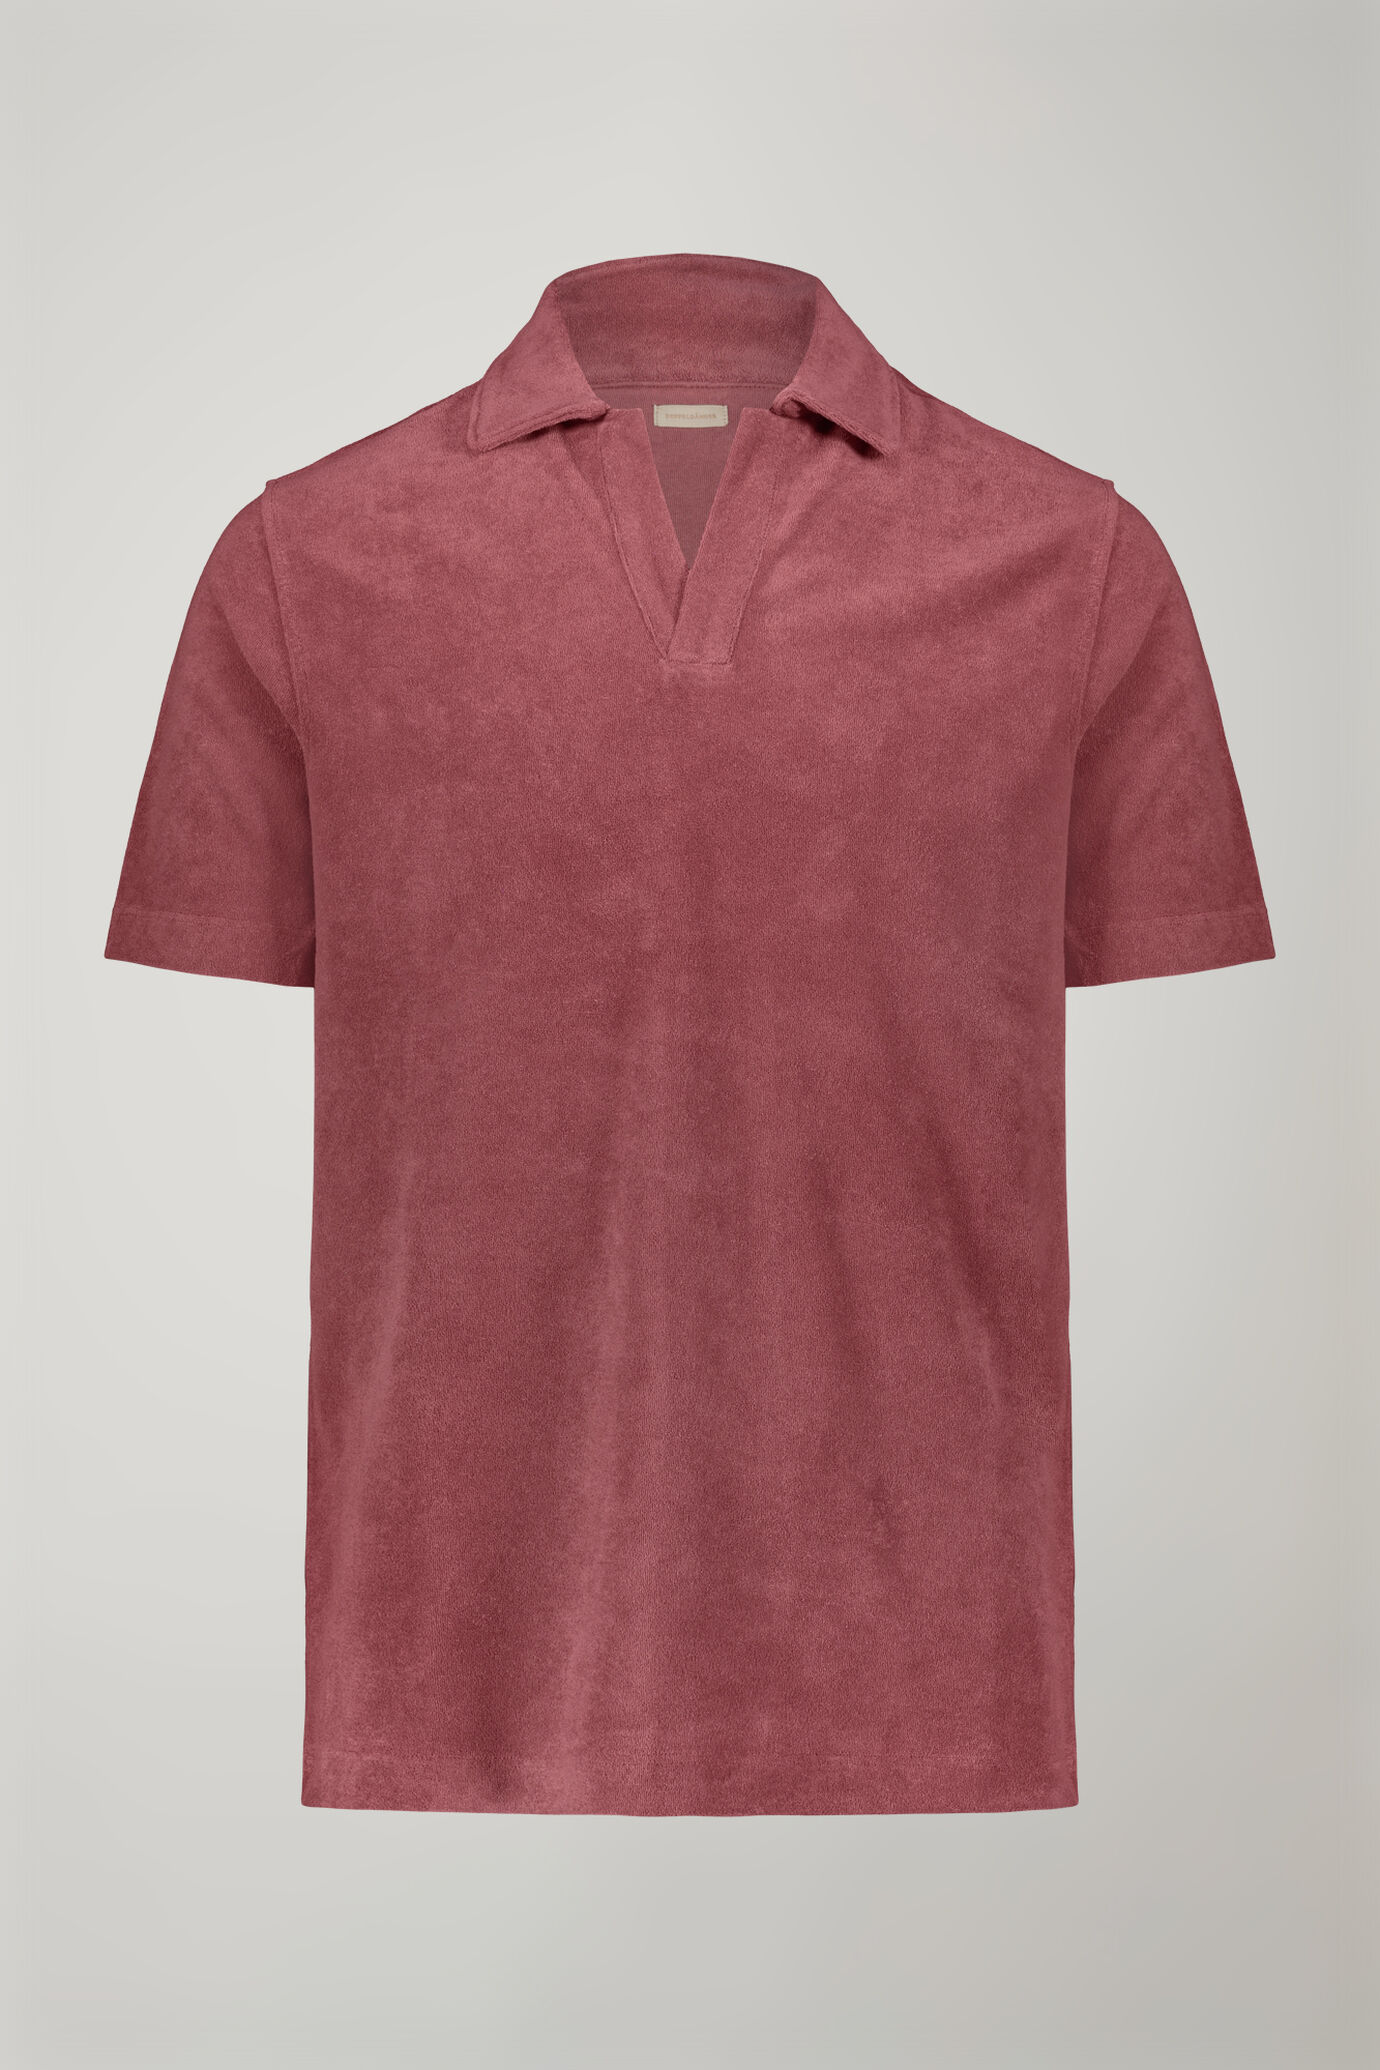 Kurzärmeliges Herren-Poloshirt mit Derby-Kragen aus Frottee in normaler Passform image number 4